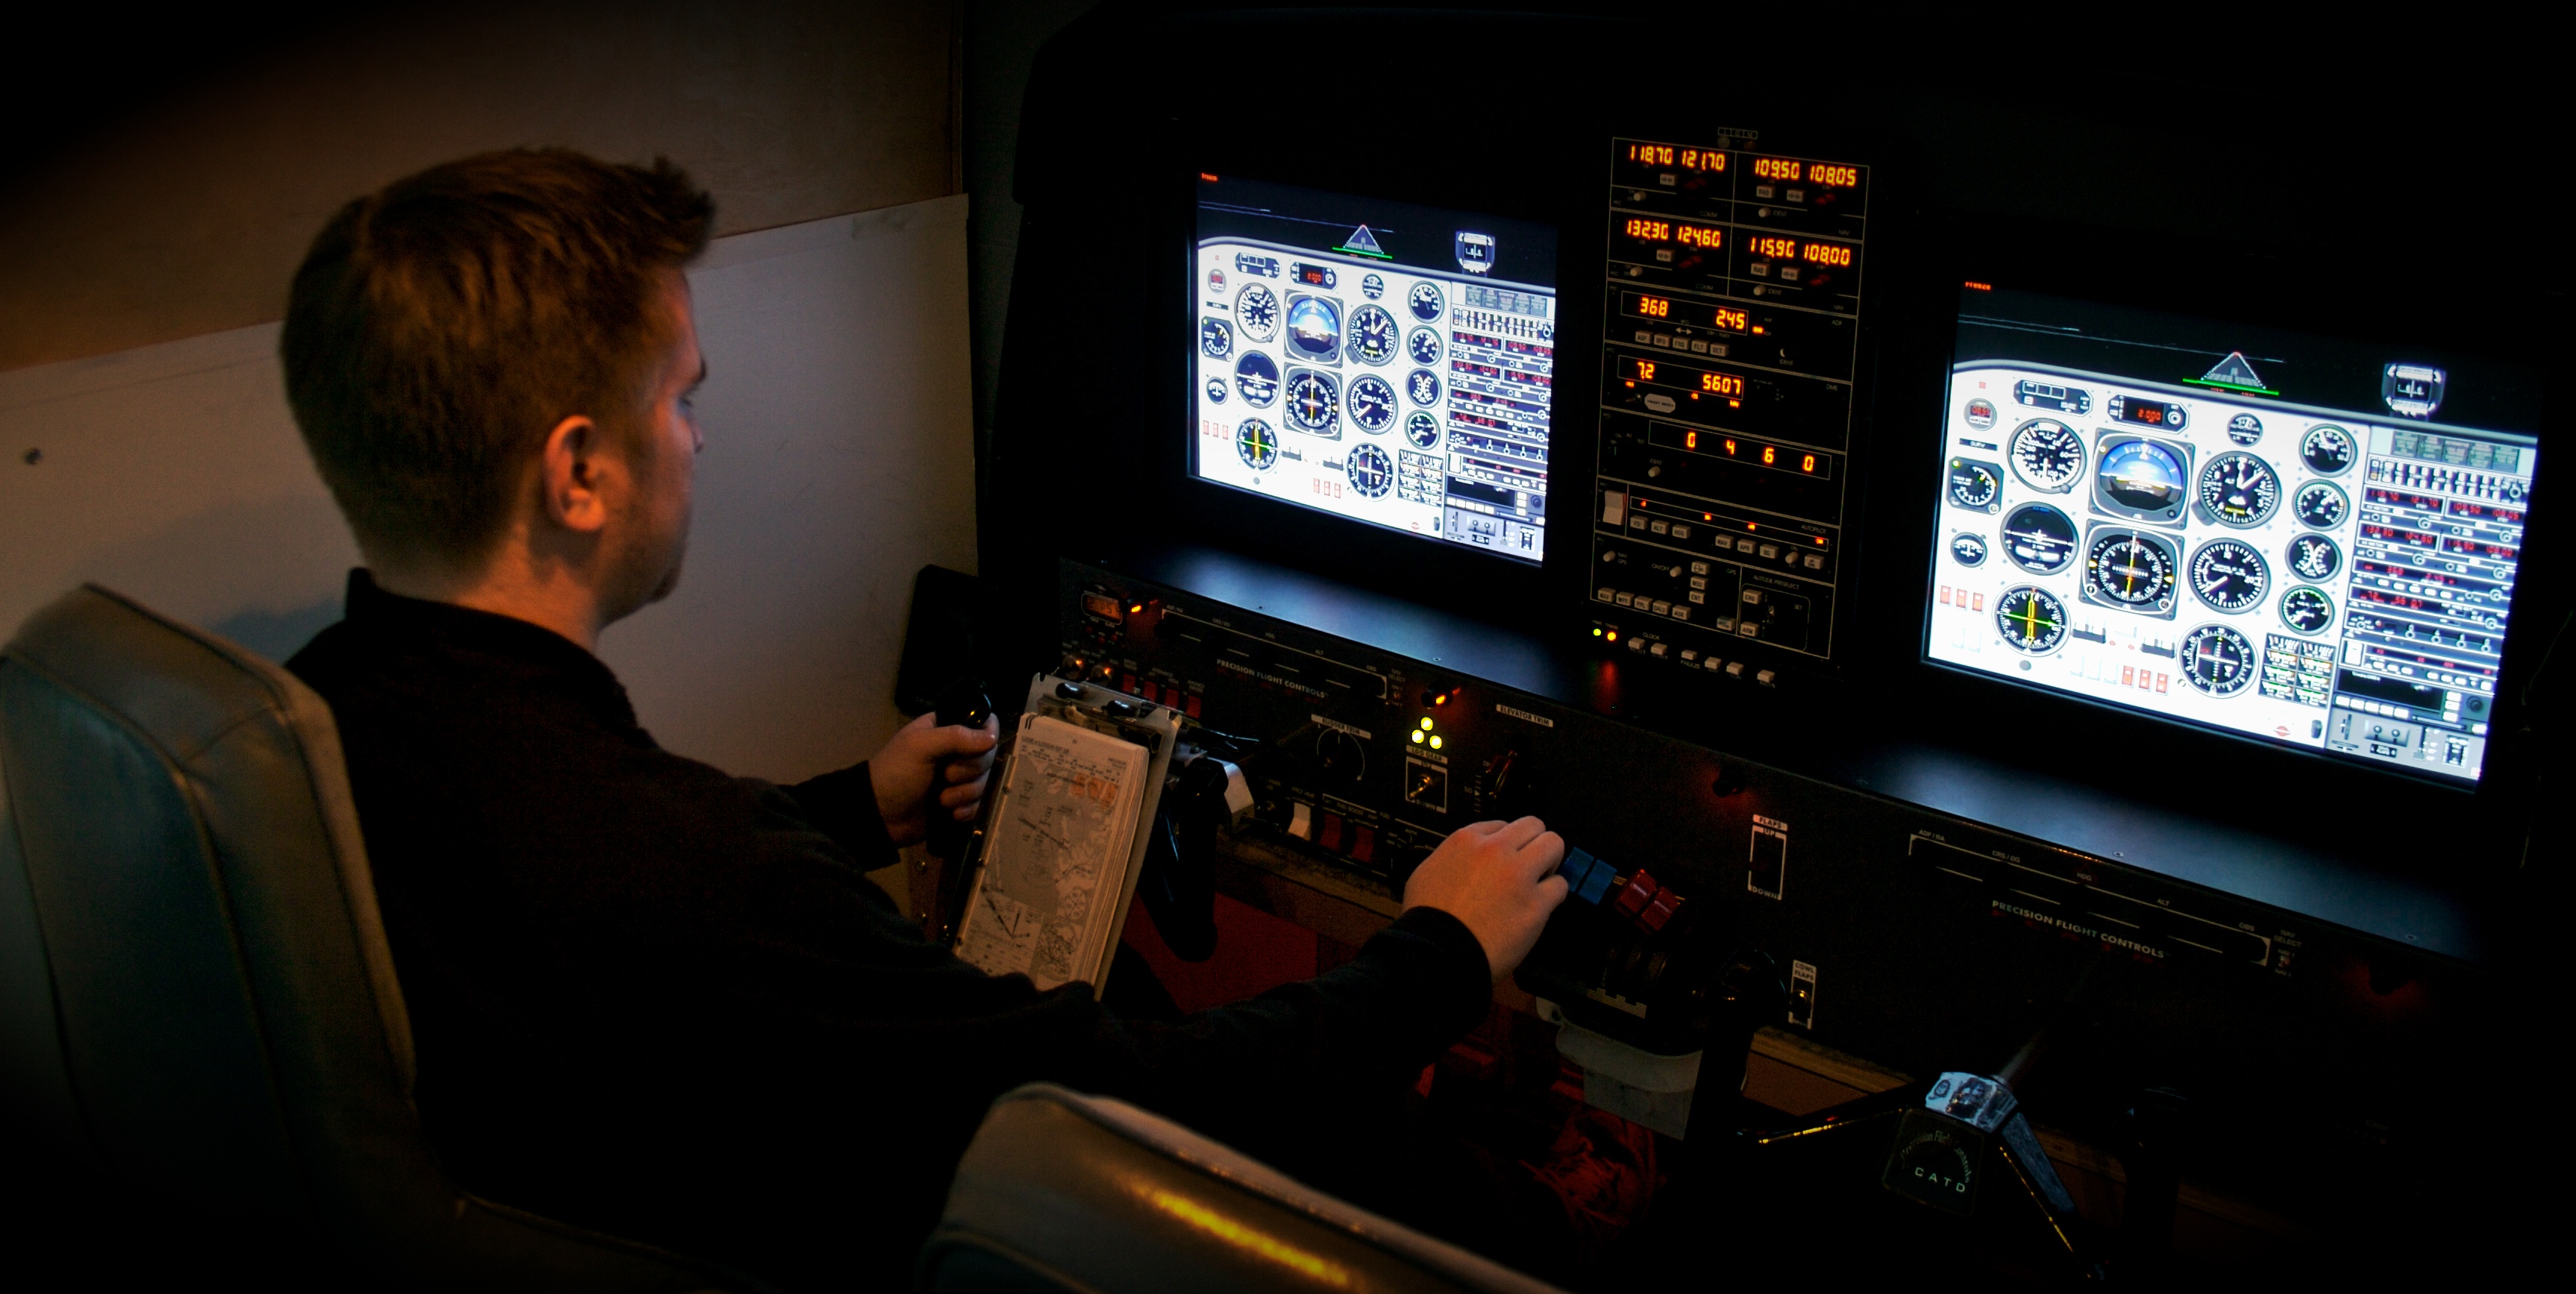 Langley Flying School's Simulator